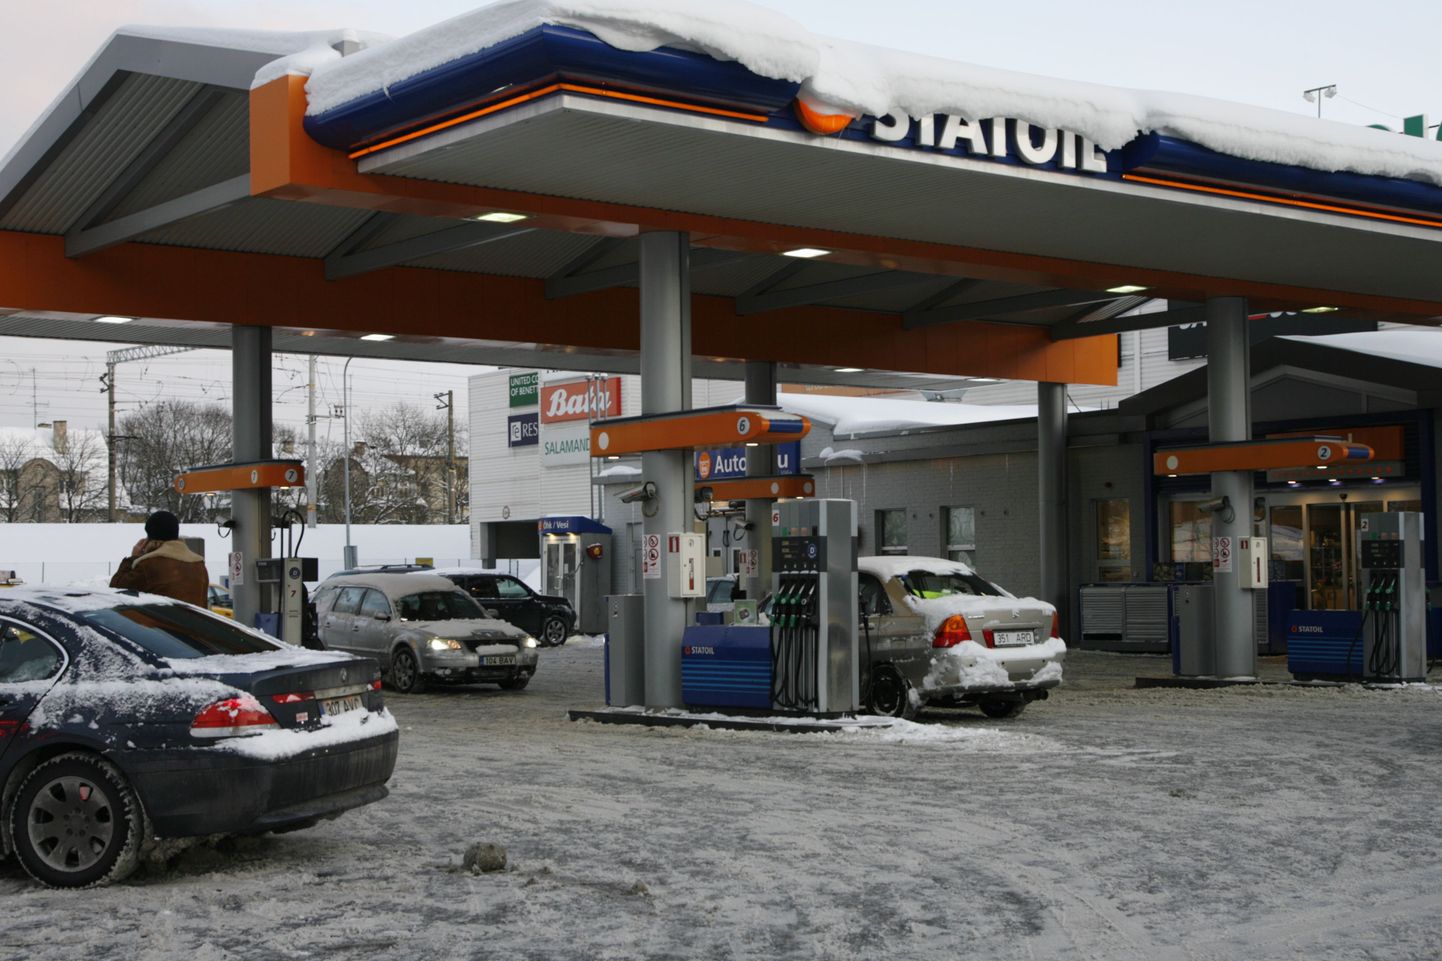 Заправка Statoil. Январь 2010 года.